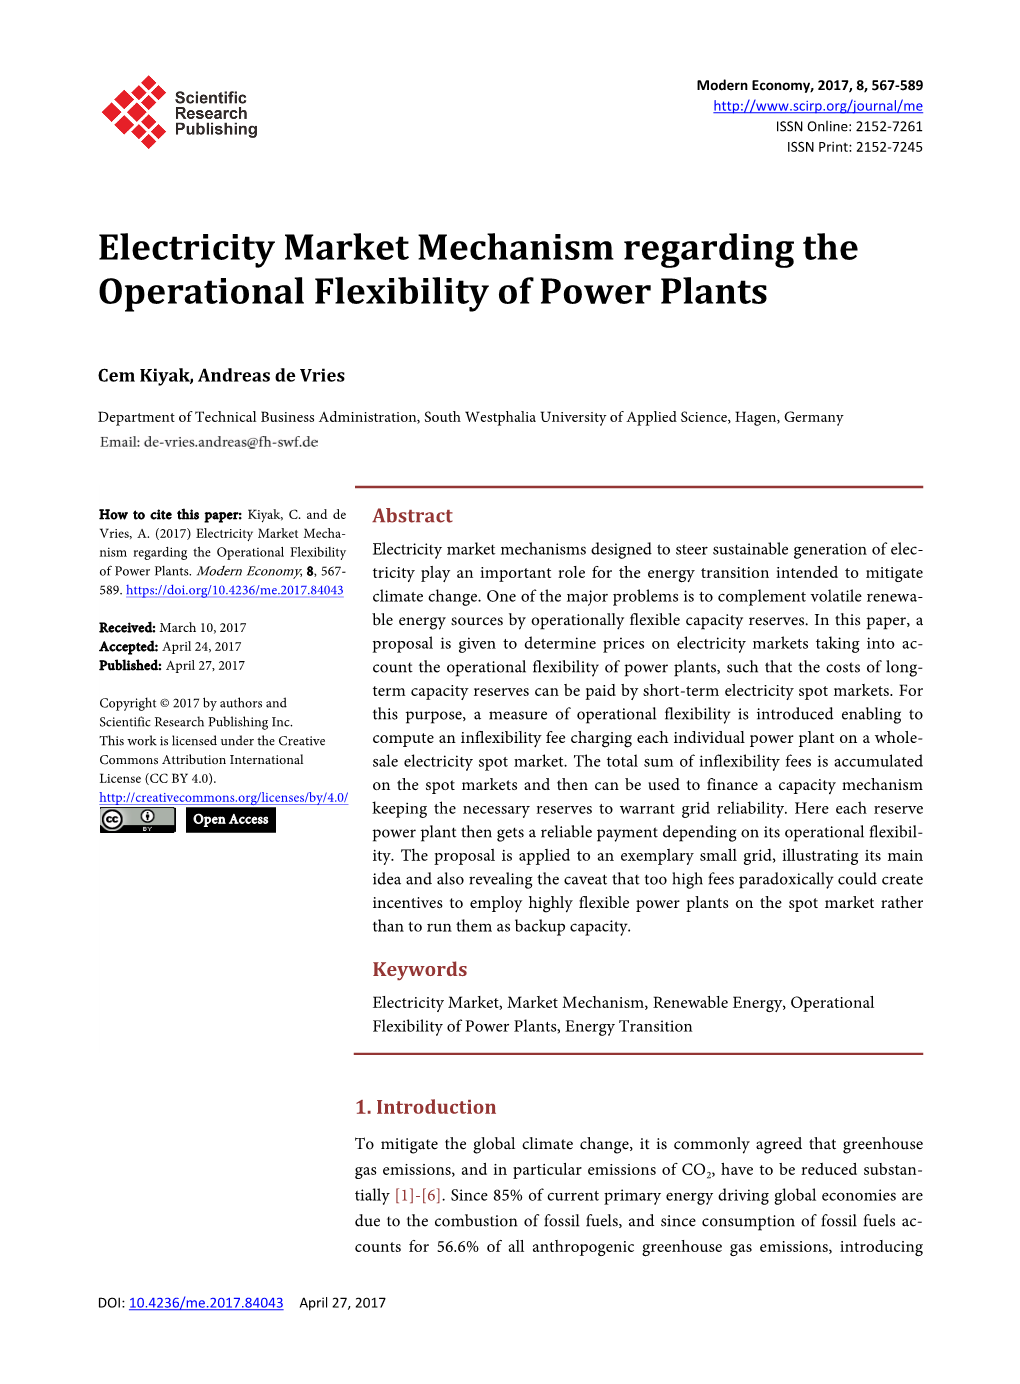 Electricity Market Mechanism Regarding the Operational Flexibility of Power Plants